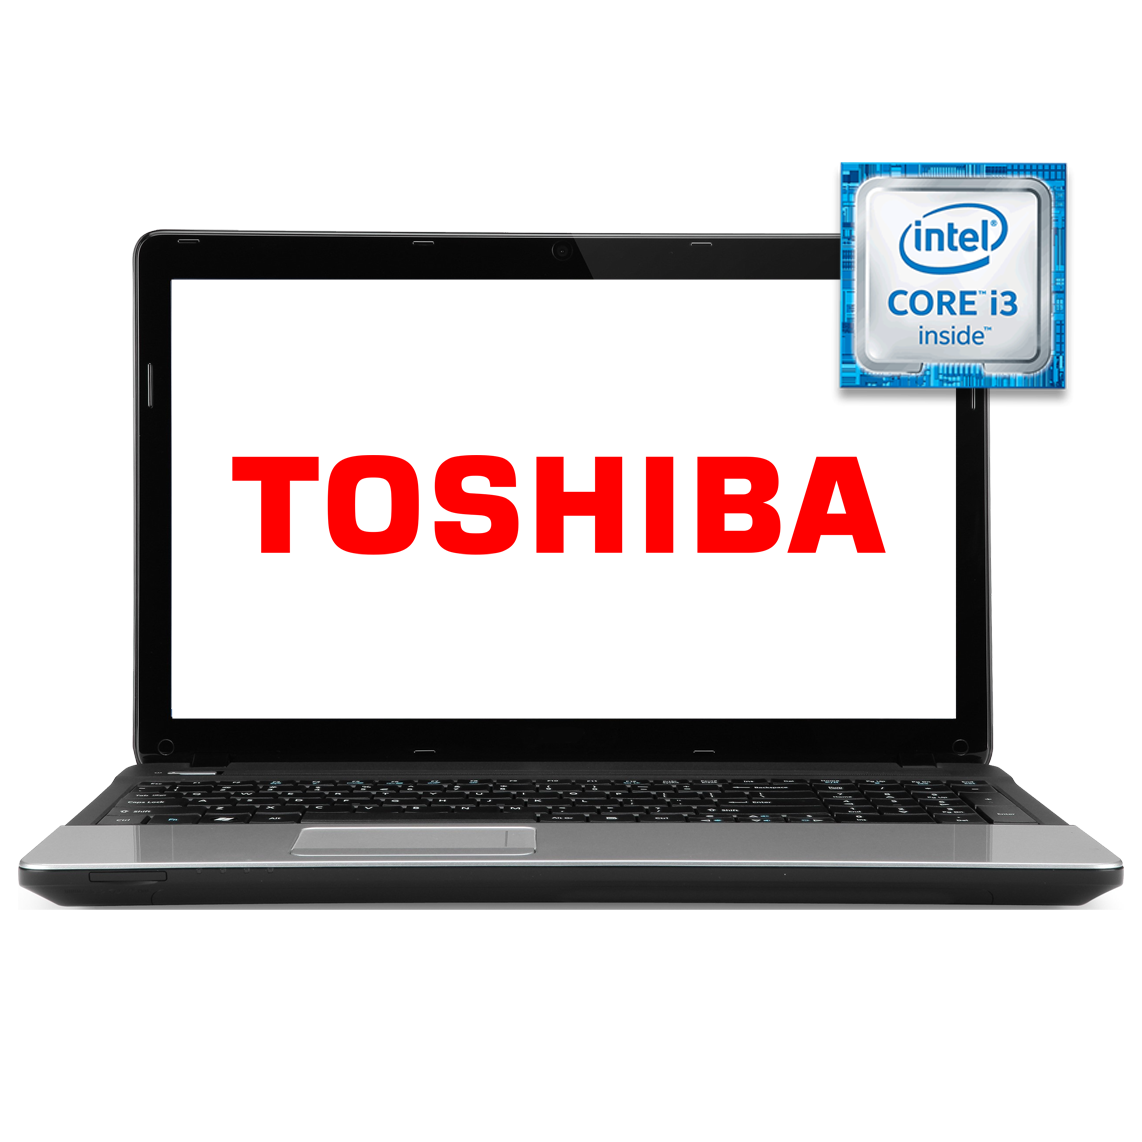 Toshiba - 17.3 inch Core i3 3rd Gen